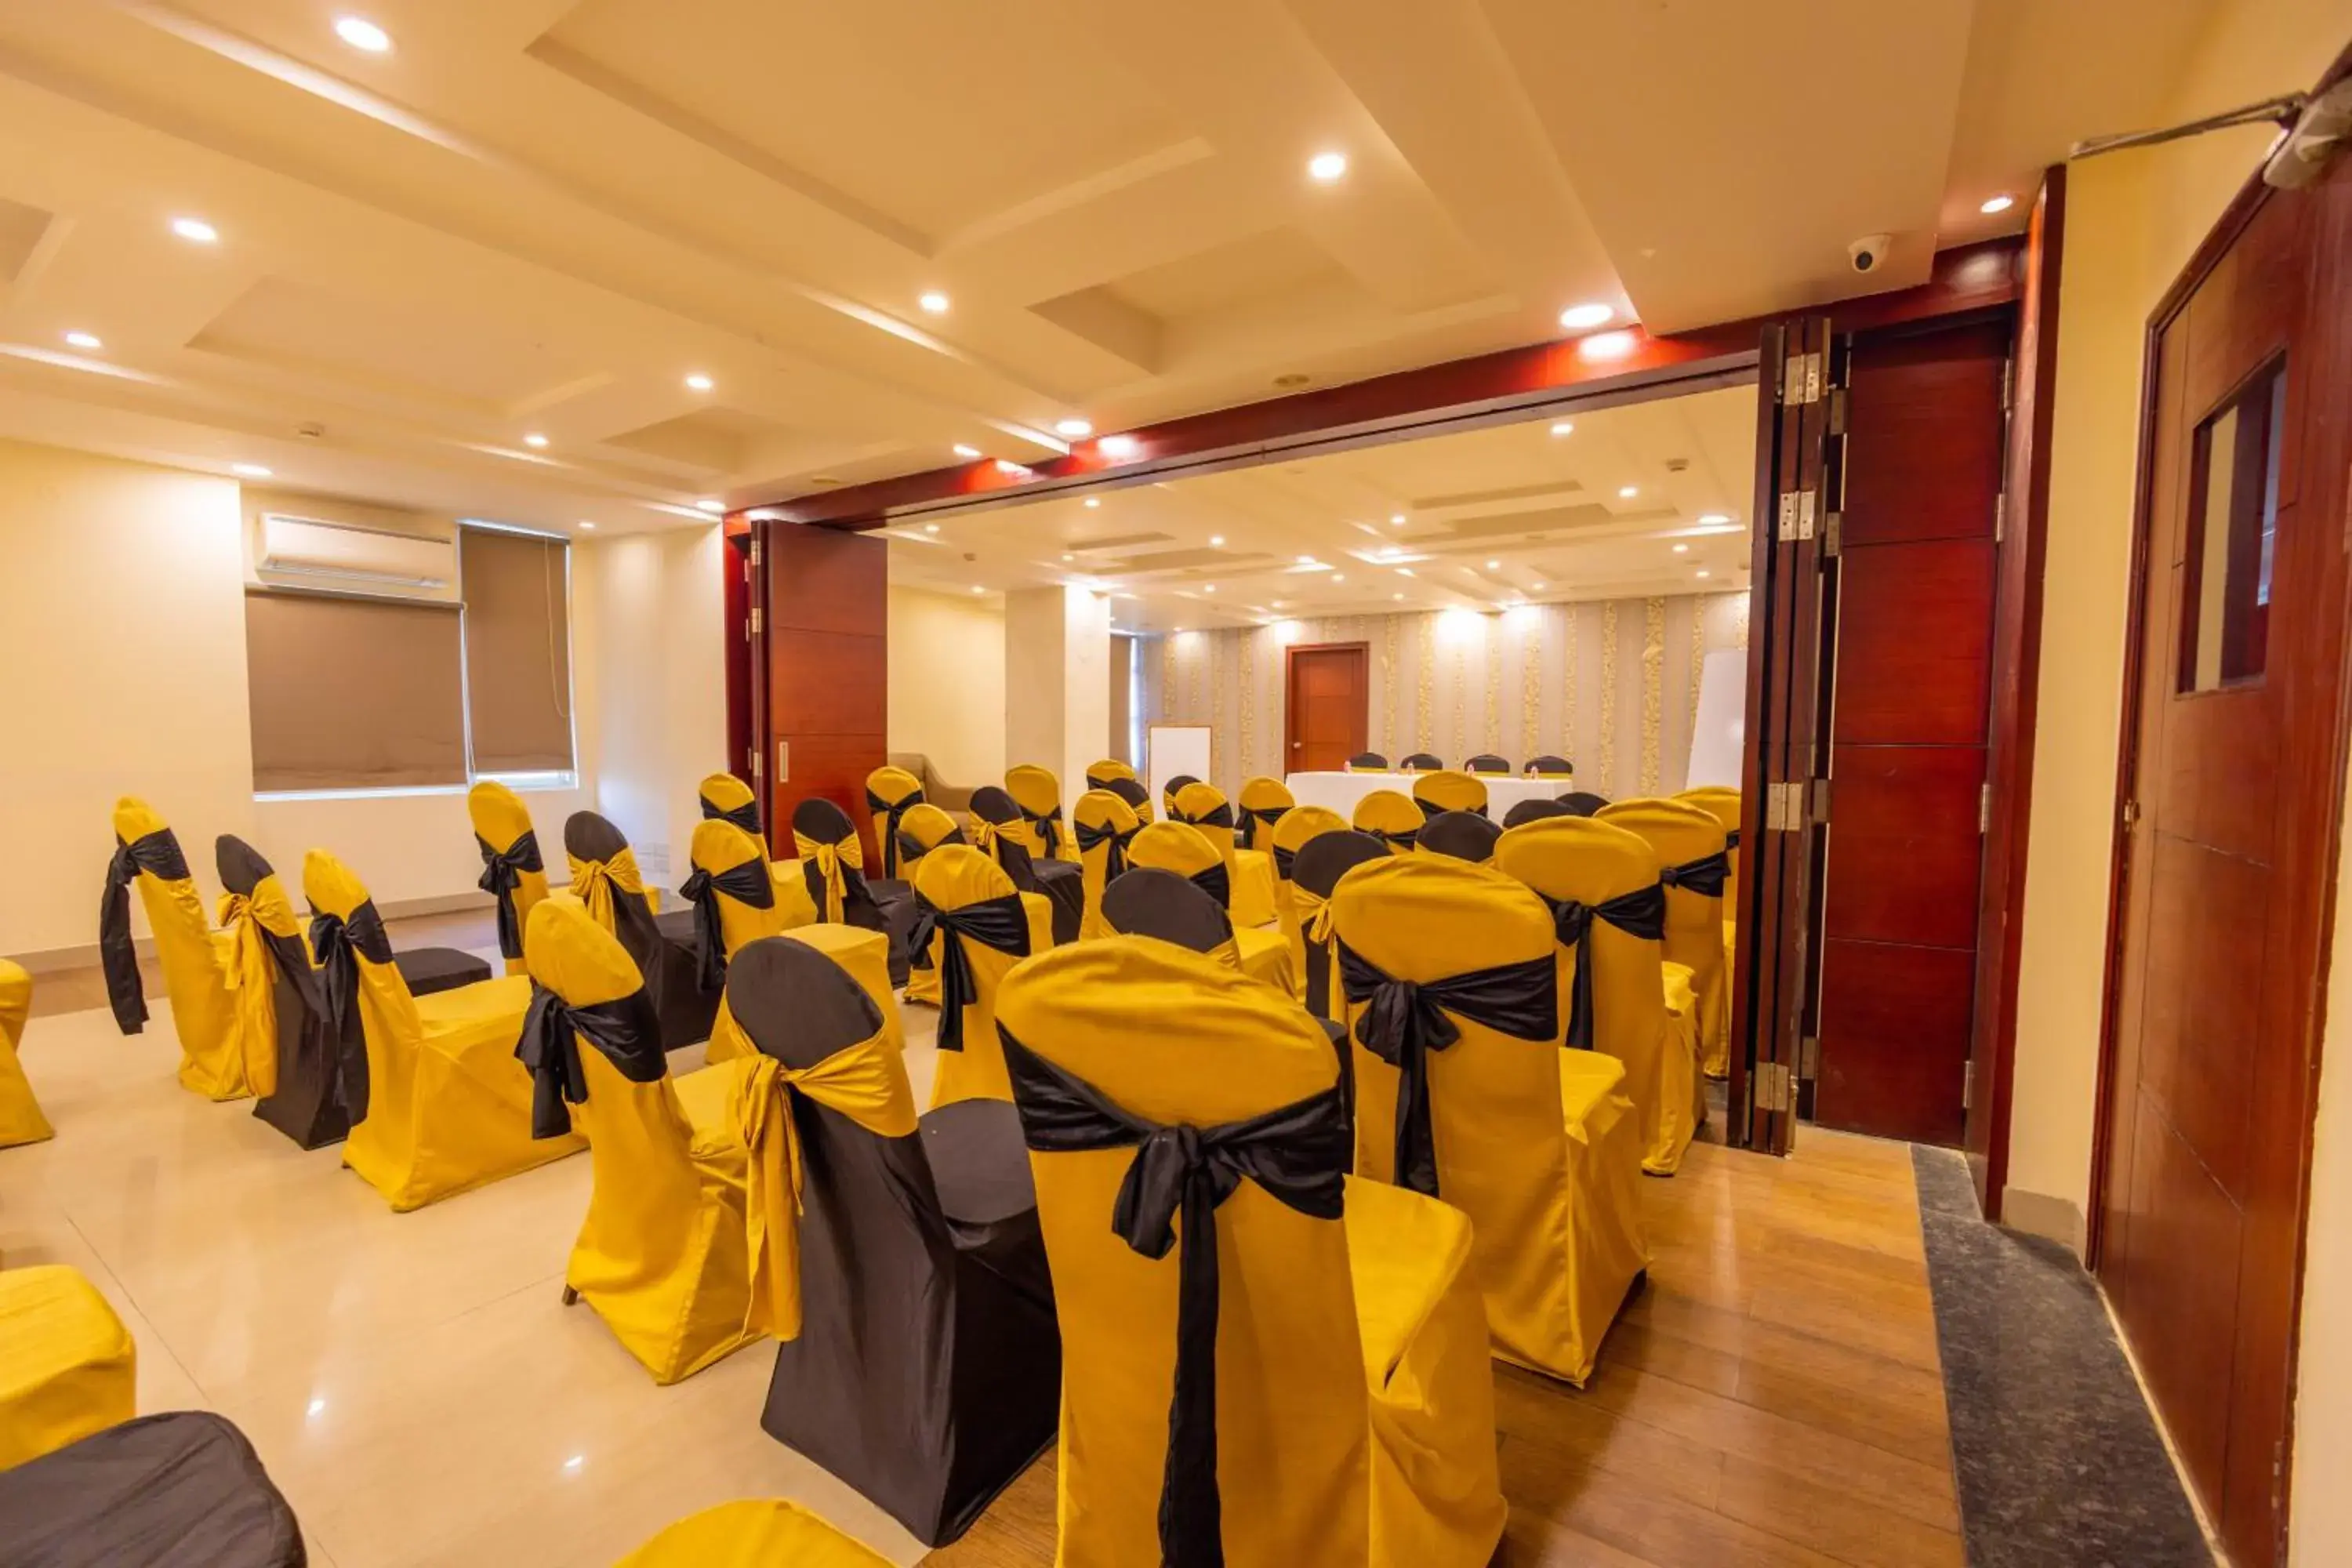 Banquet/Function facilities, Banquet Facilities in Hotel Clarks Inn Jaipur, Banipark